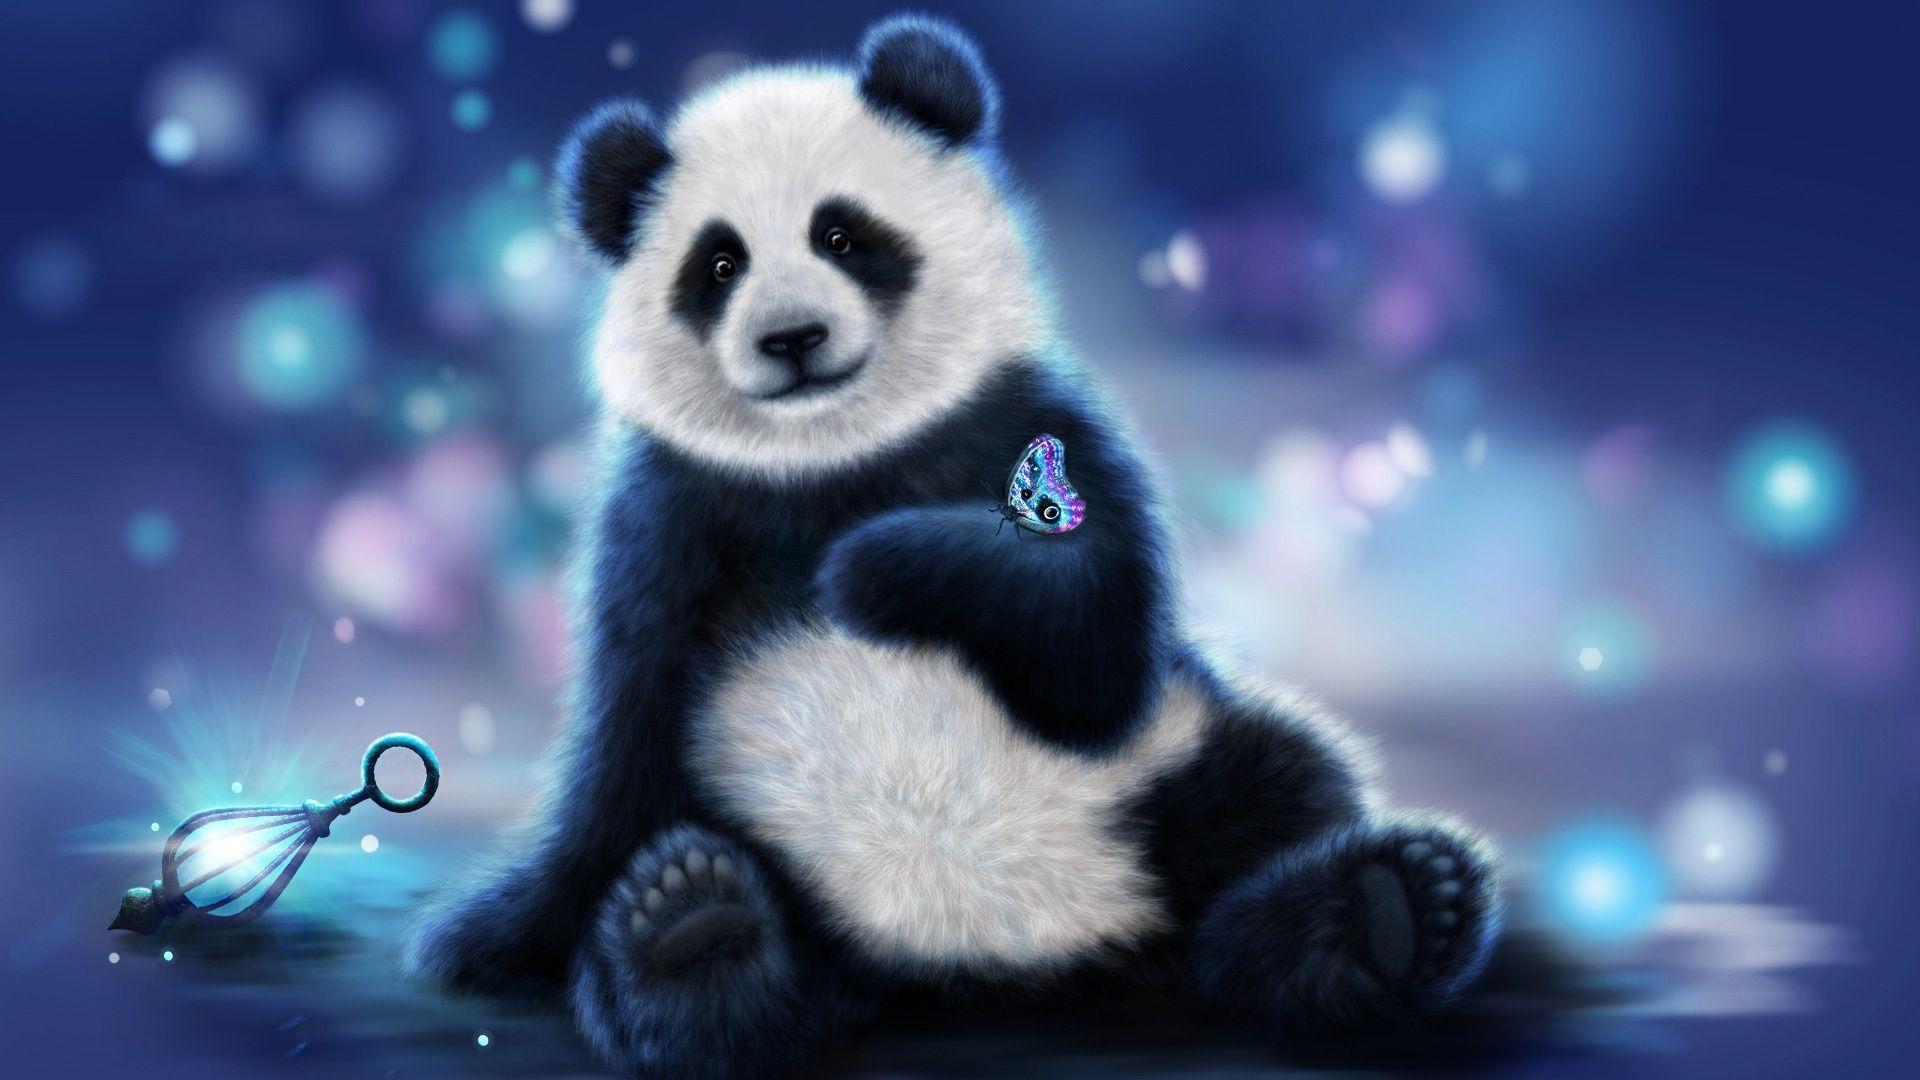 Wallpaper.wiki Cute Panda Image HD Tumblr Free PIC WPE007517